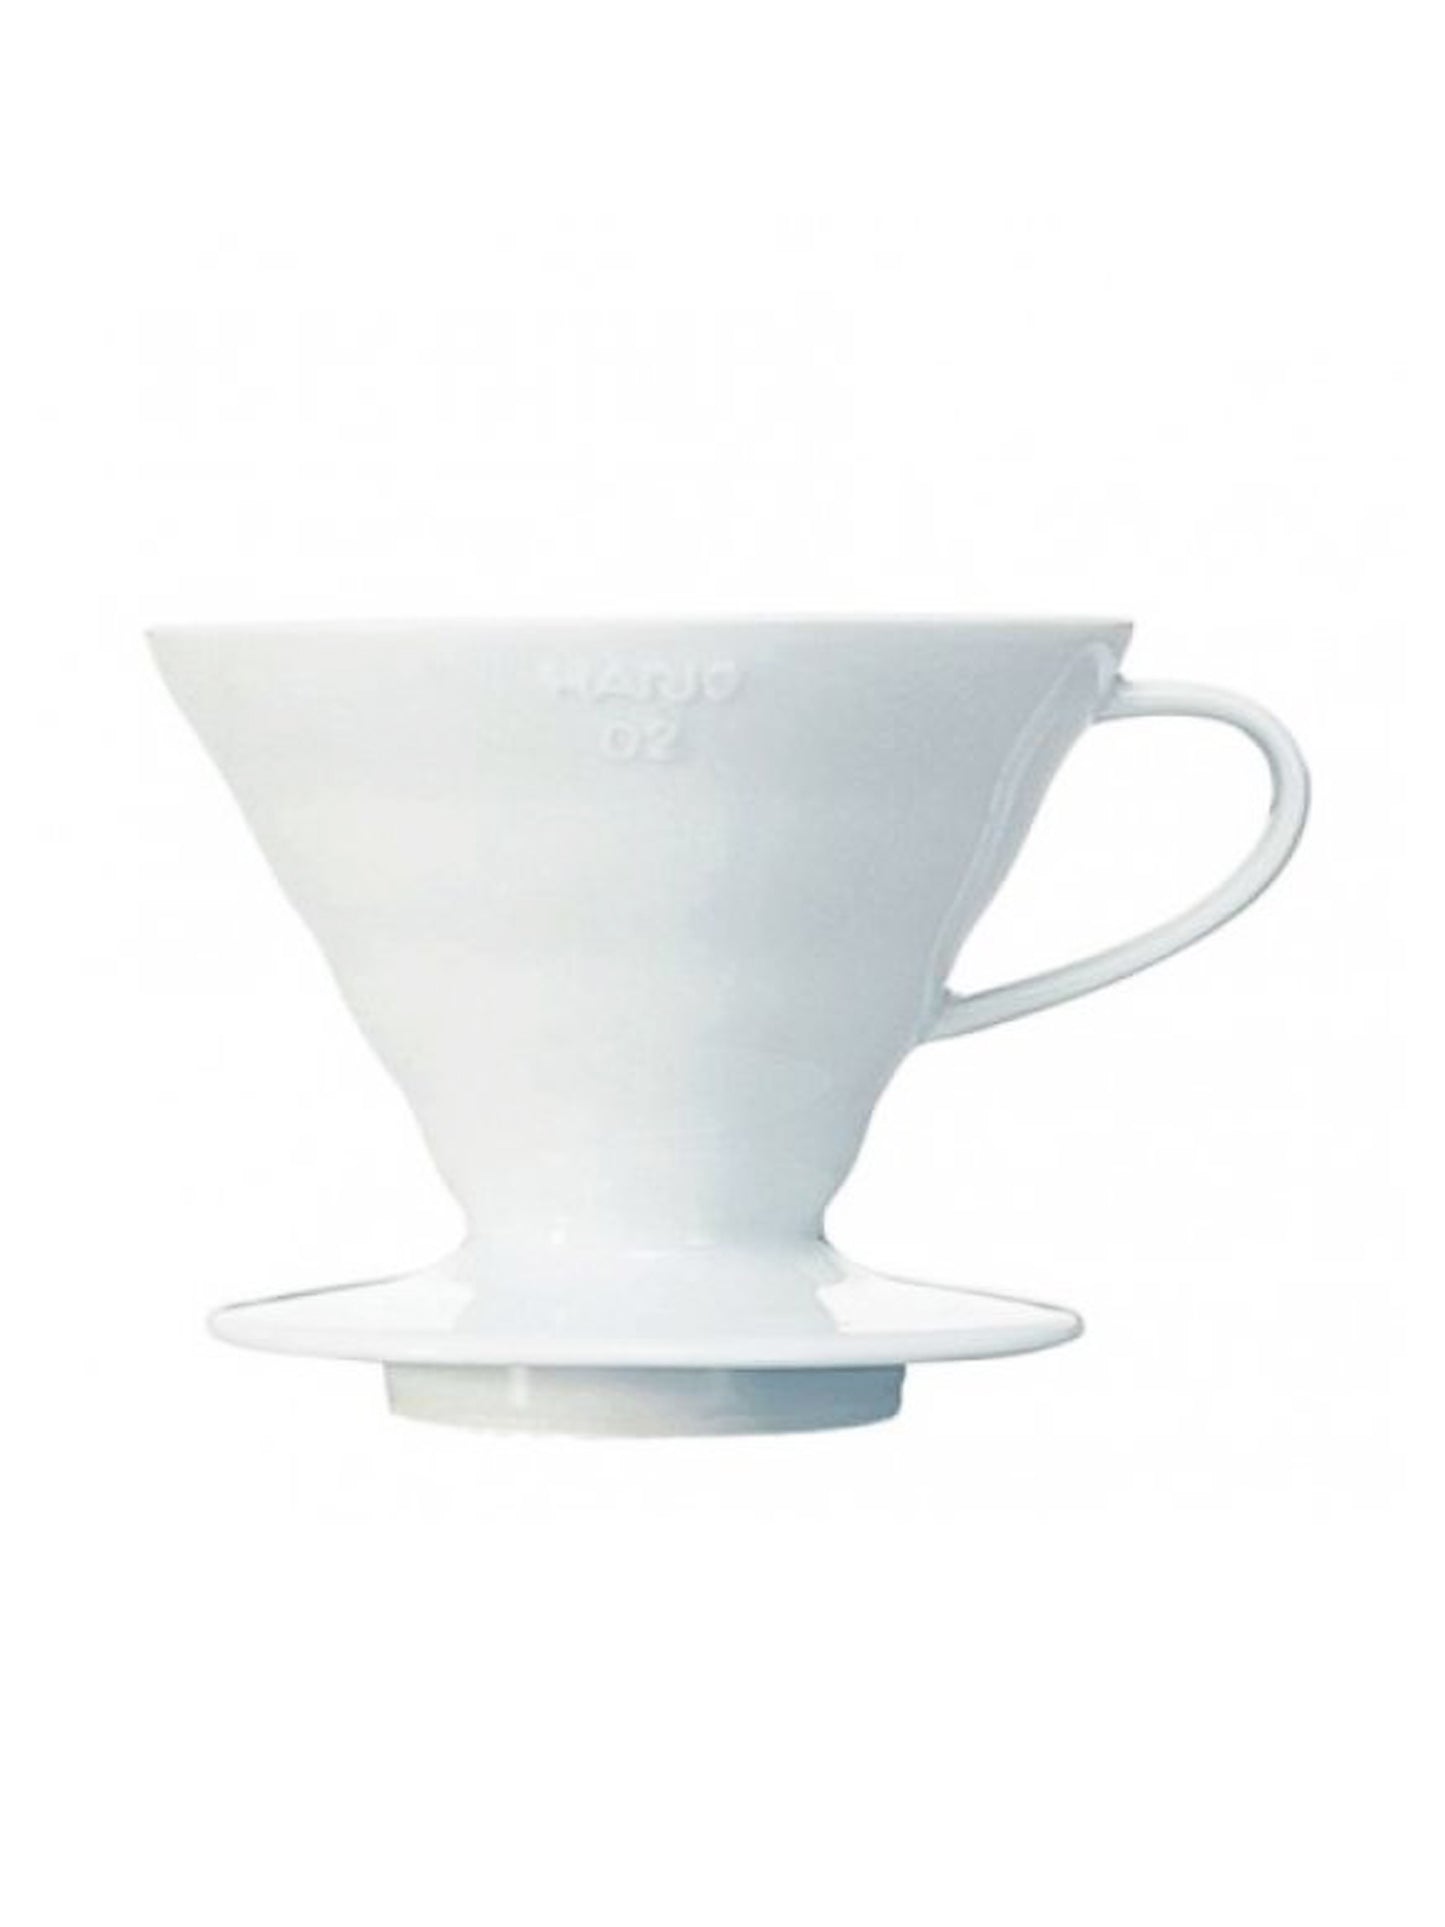 Hario Coffee Dripper V60 02 Keramik weiss